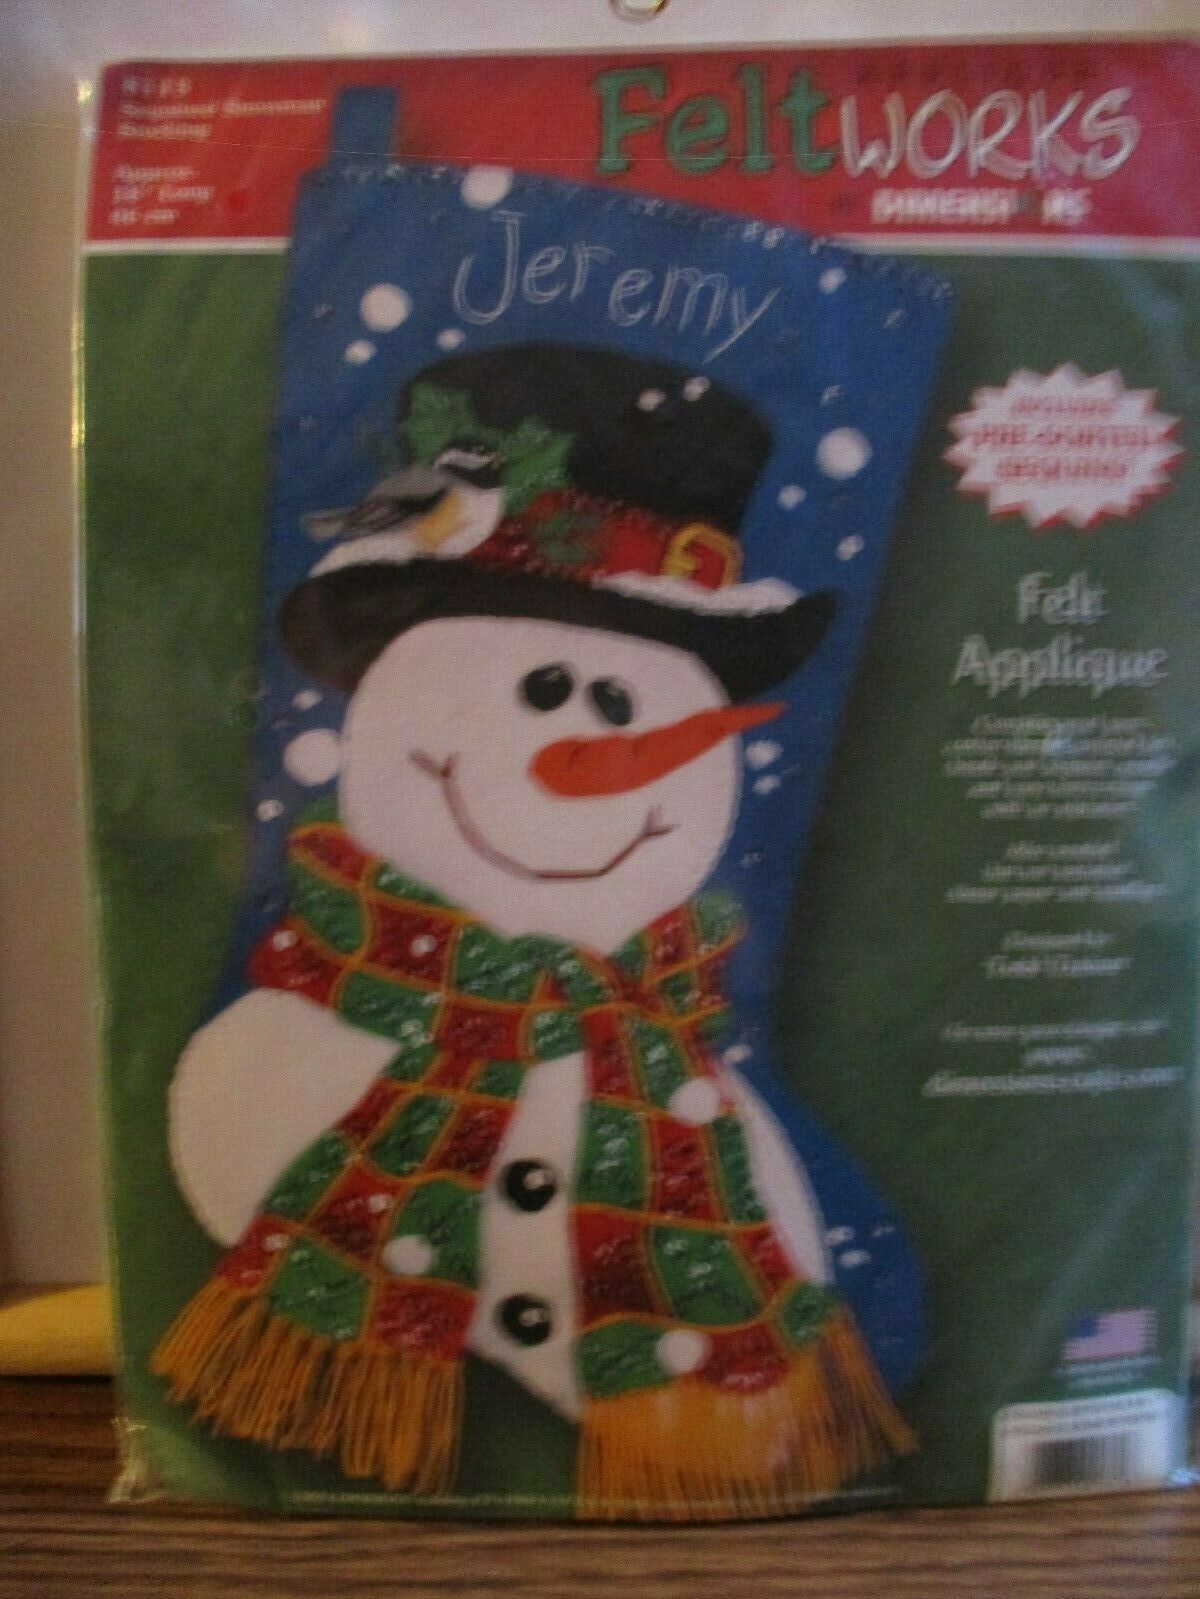 2002 Felt Works Sequined Snowman Felt Applique Stocking Kit #8113